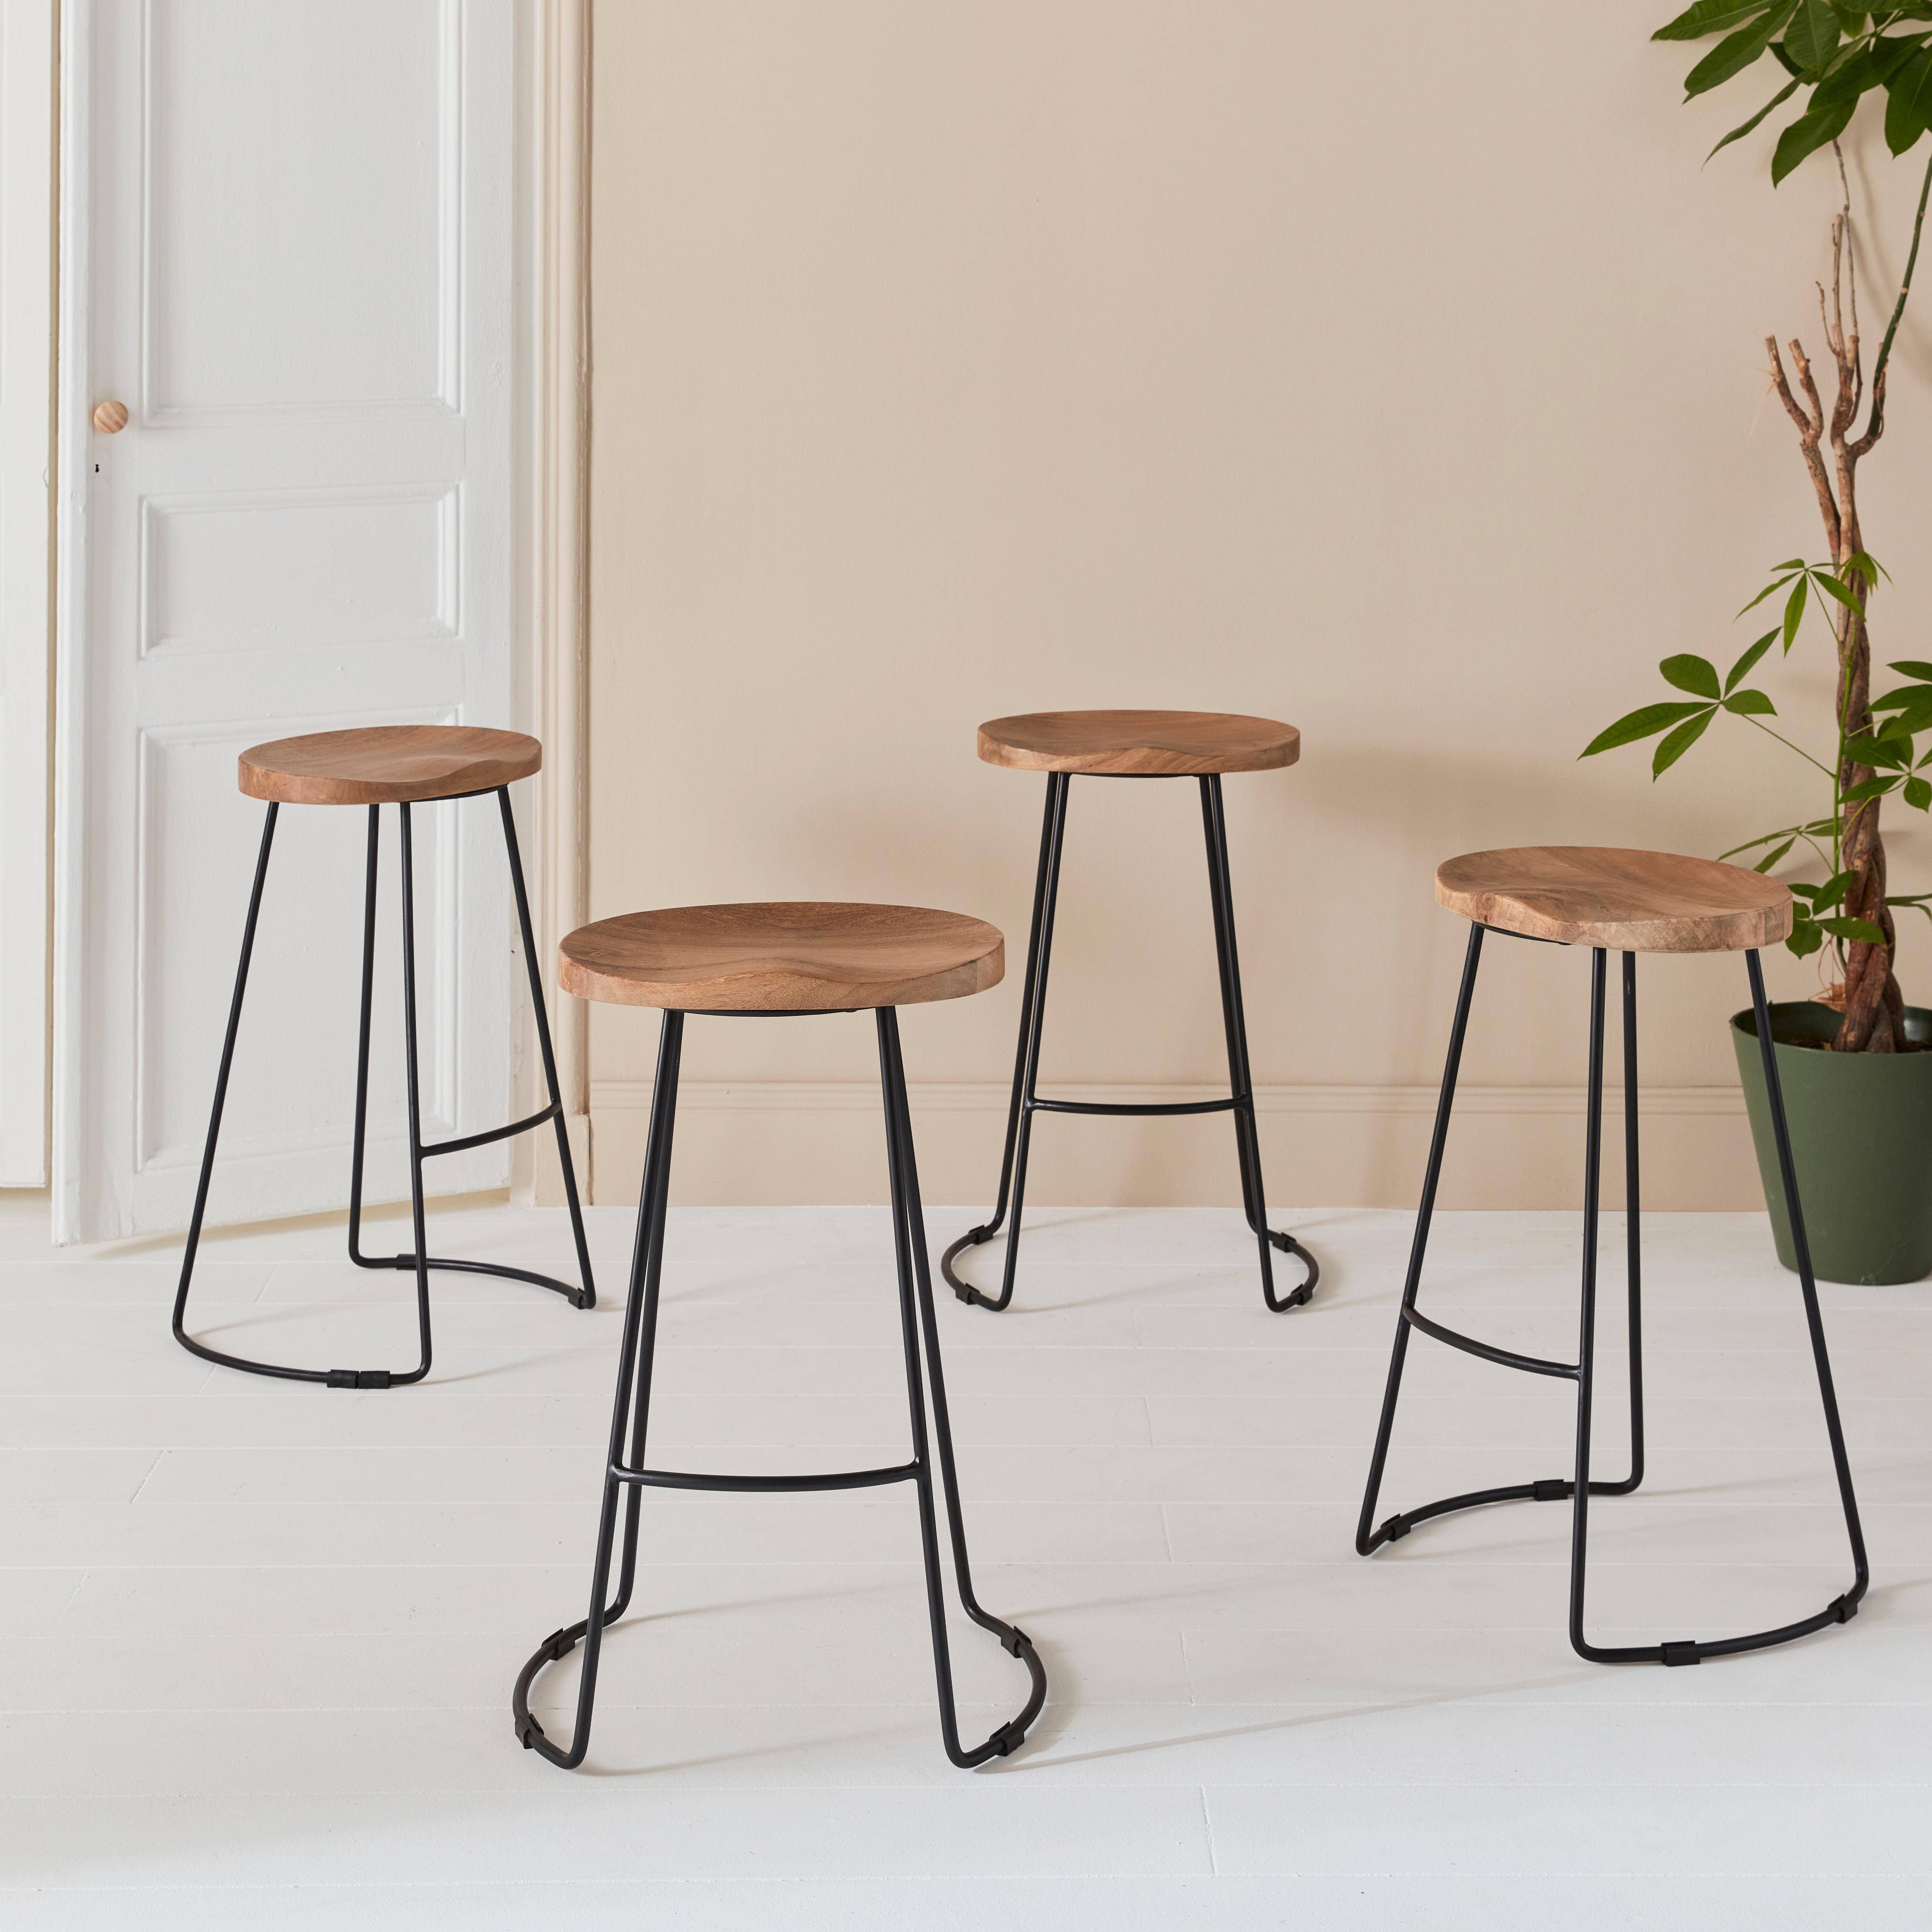 Set of 4 industrial metal and wooden bar stools, 44x36x65cm, Jaya, Mango wood seat, black metal legs,sweeek,Photo1